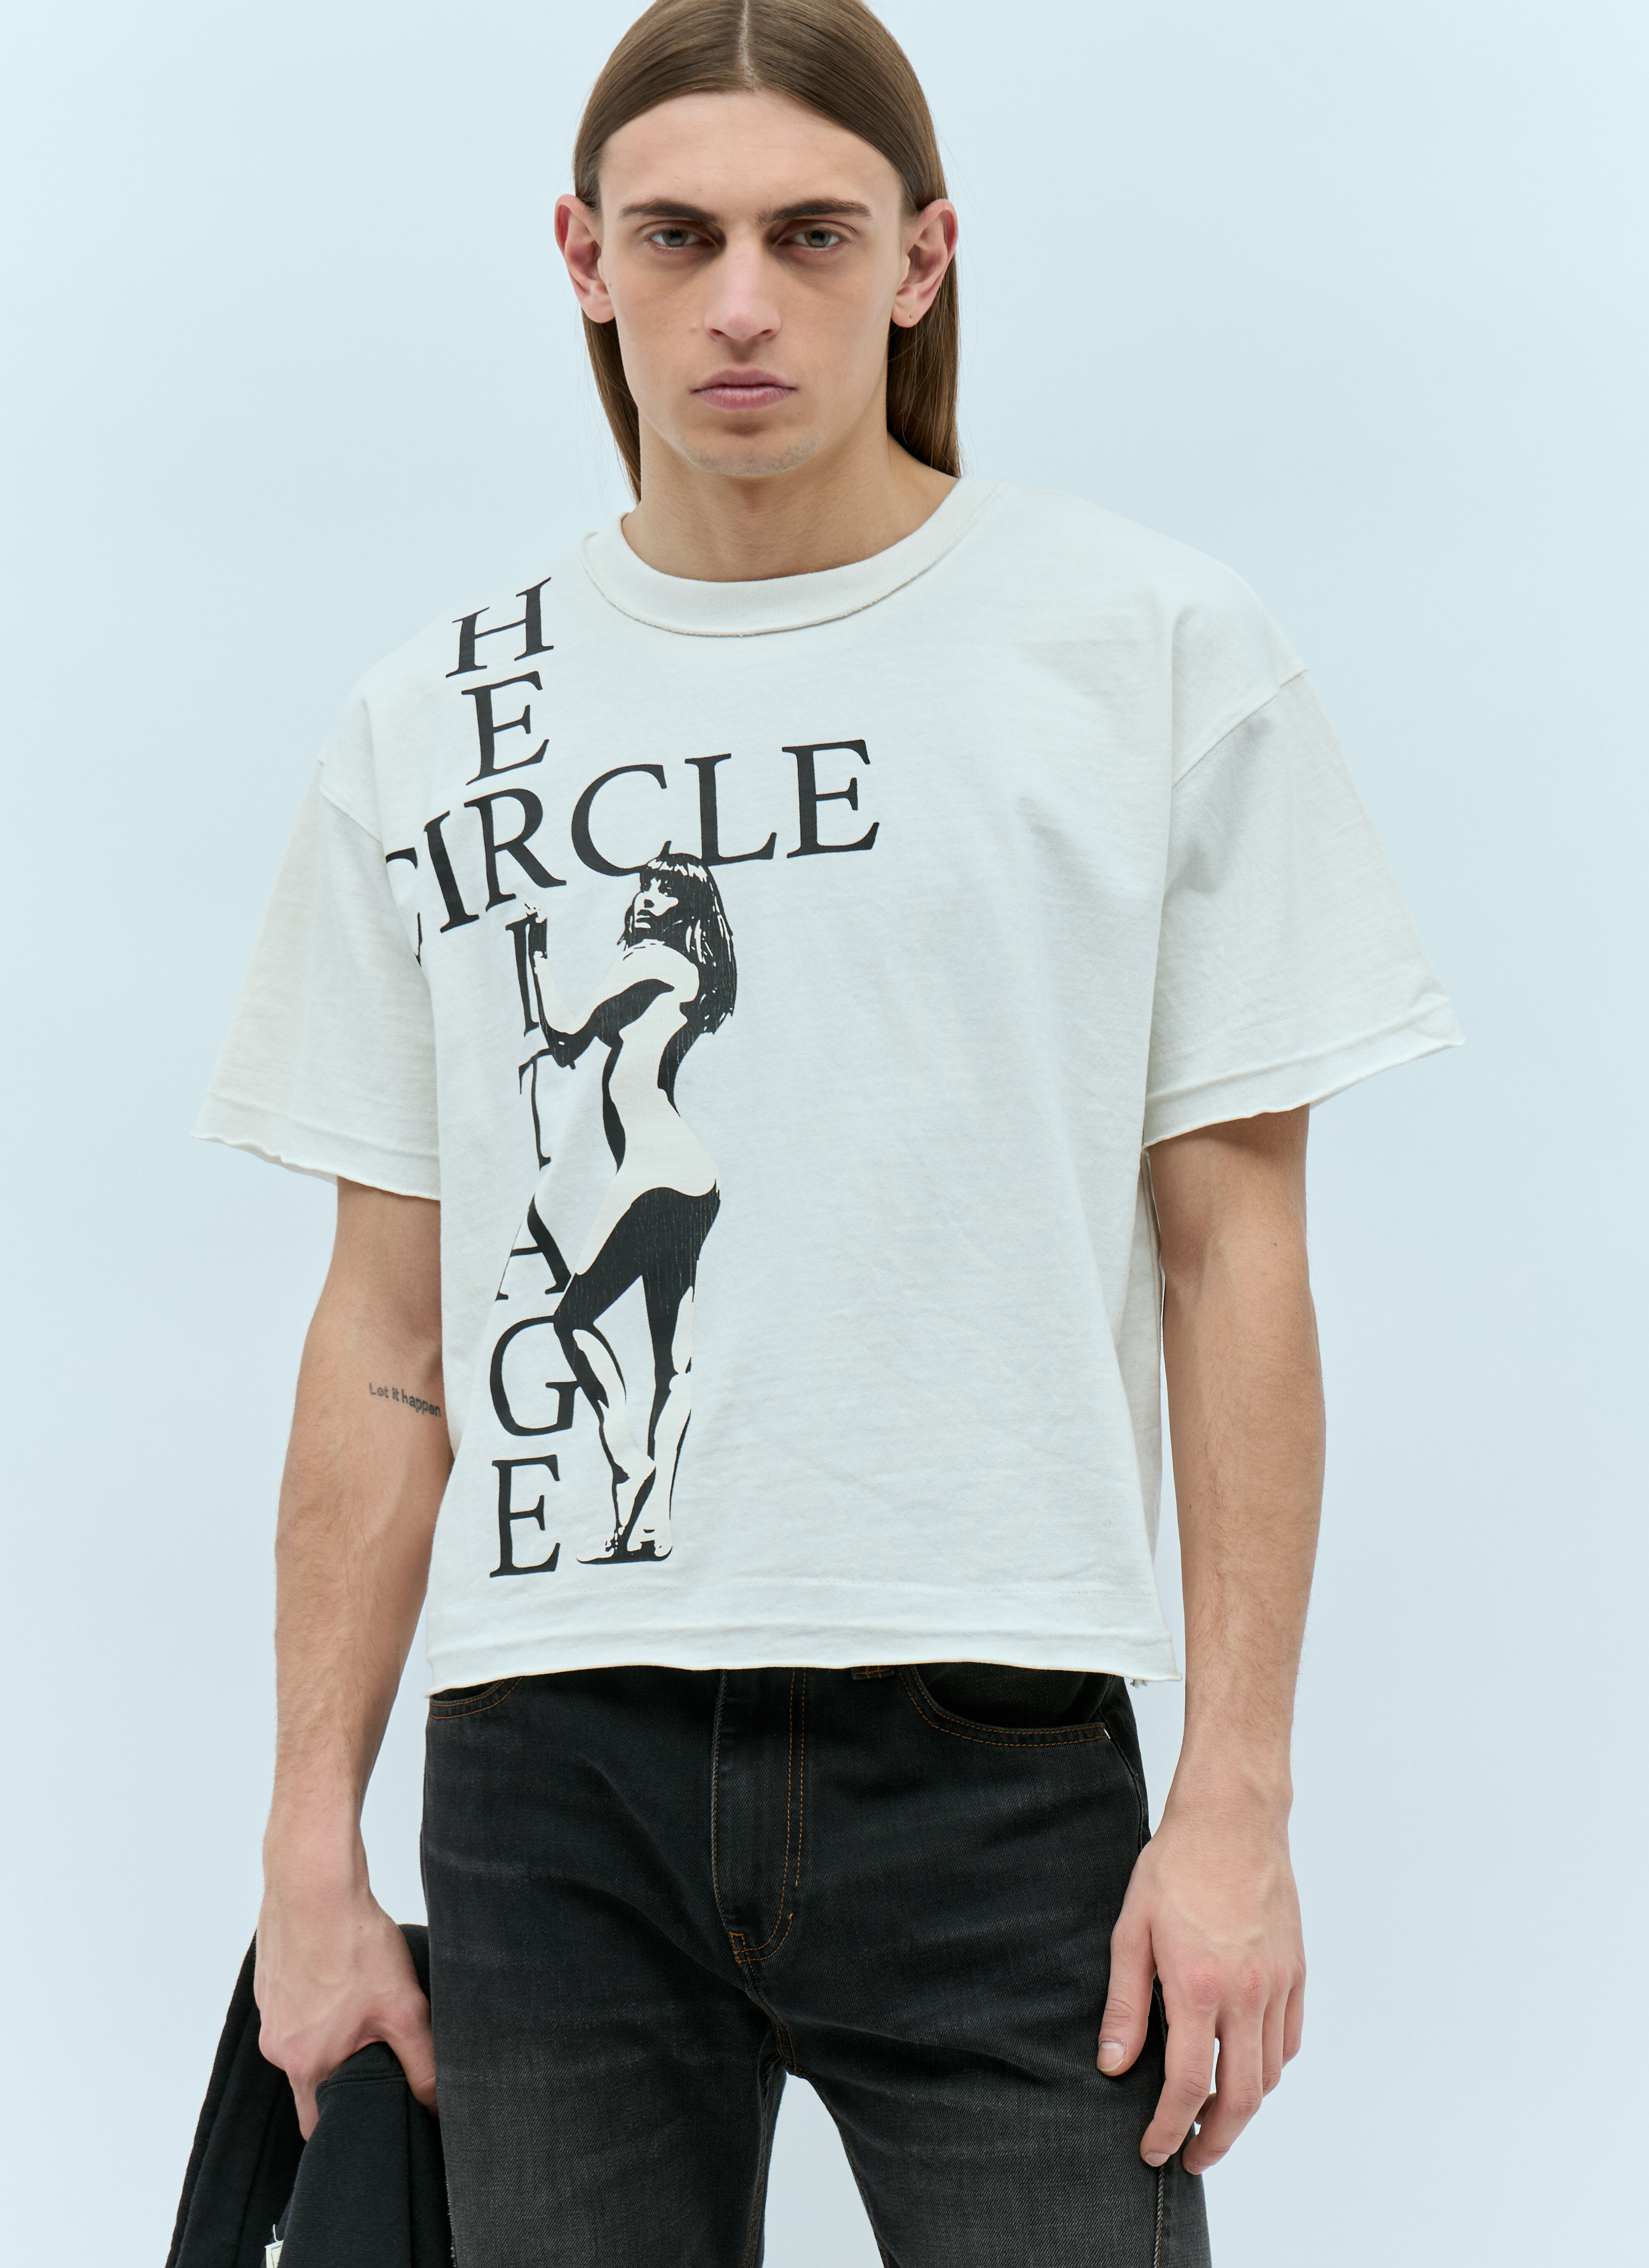 HYSTERIC GLAMOUR x CIRCLE HERITAGE Pin Up Girl T-Shirt Black hgc0155002